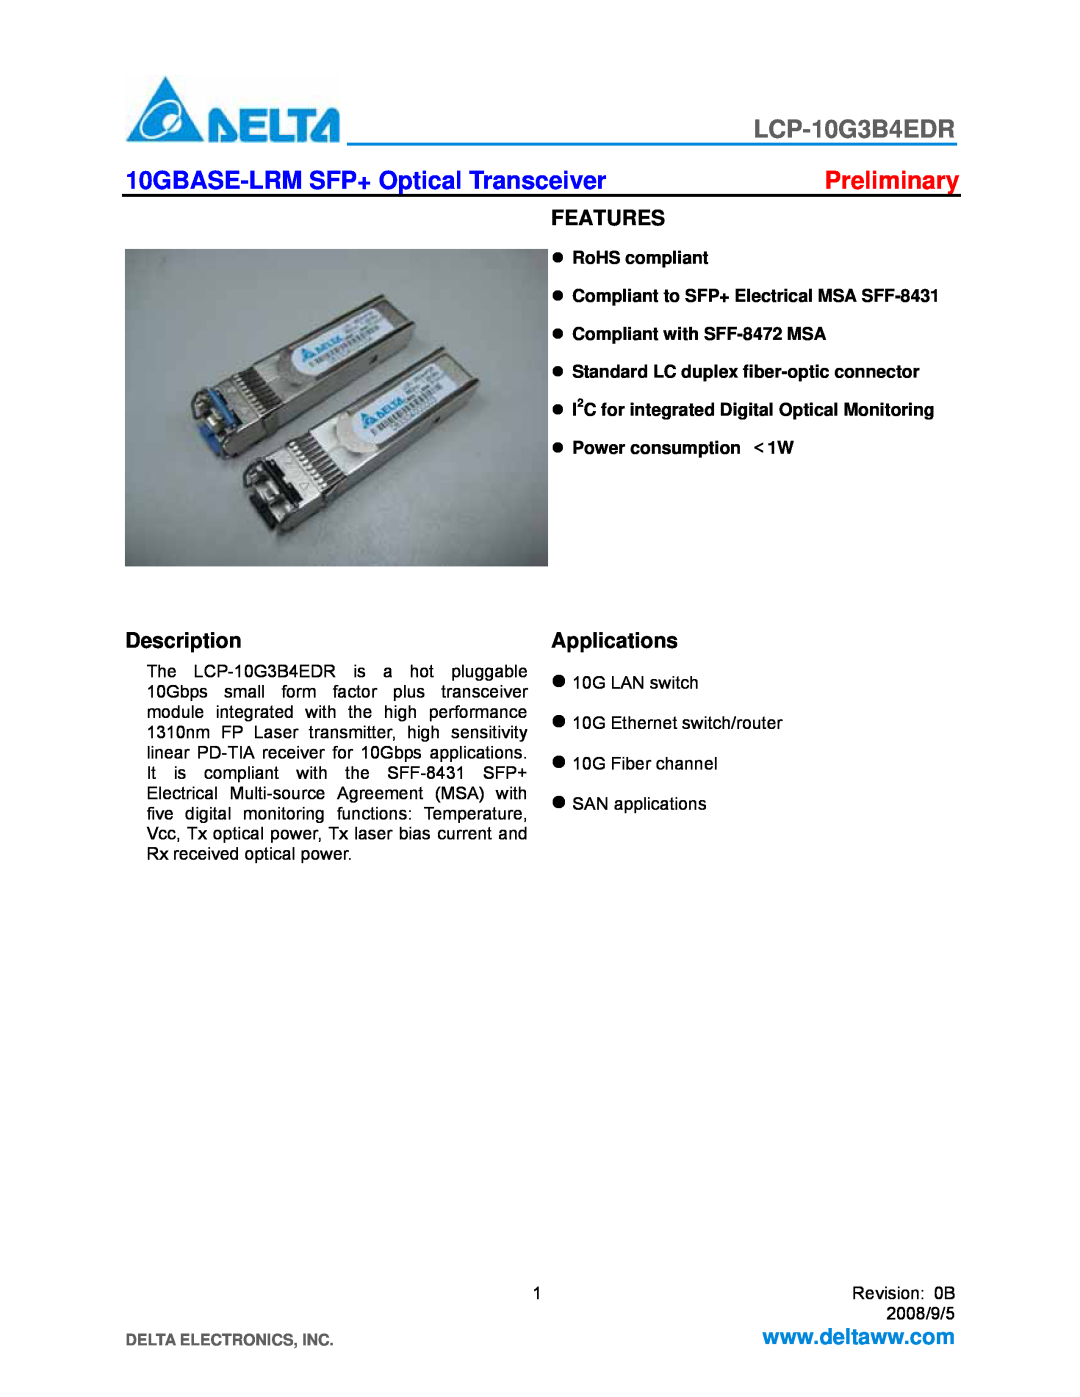 Delta Electronics LCP-10G3B4EDR manual Features, Description, Applications, 10GBASE-LRM SFP+ Optical Transceiver 